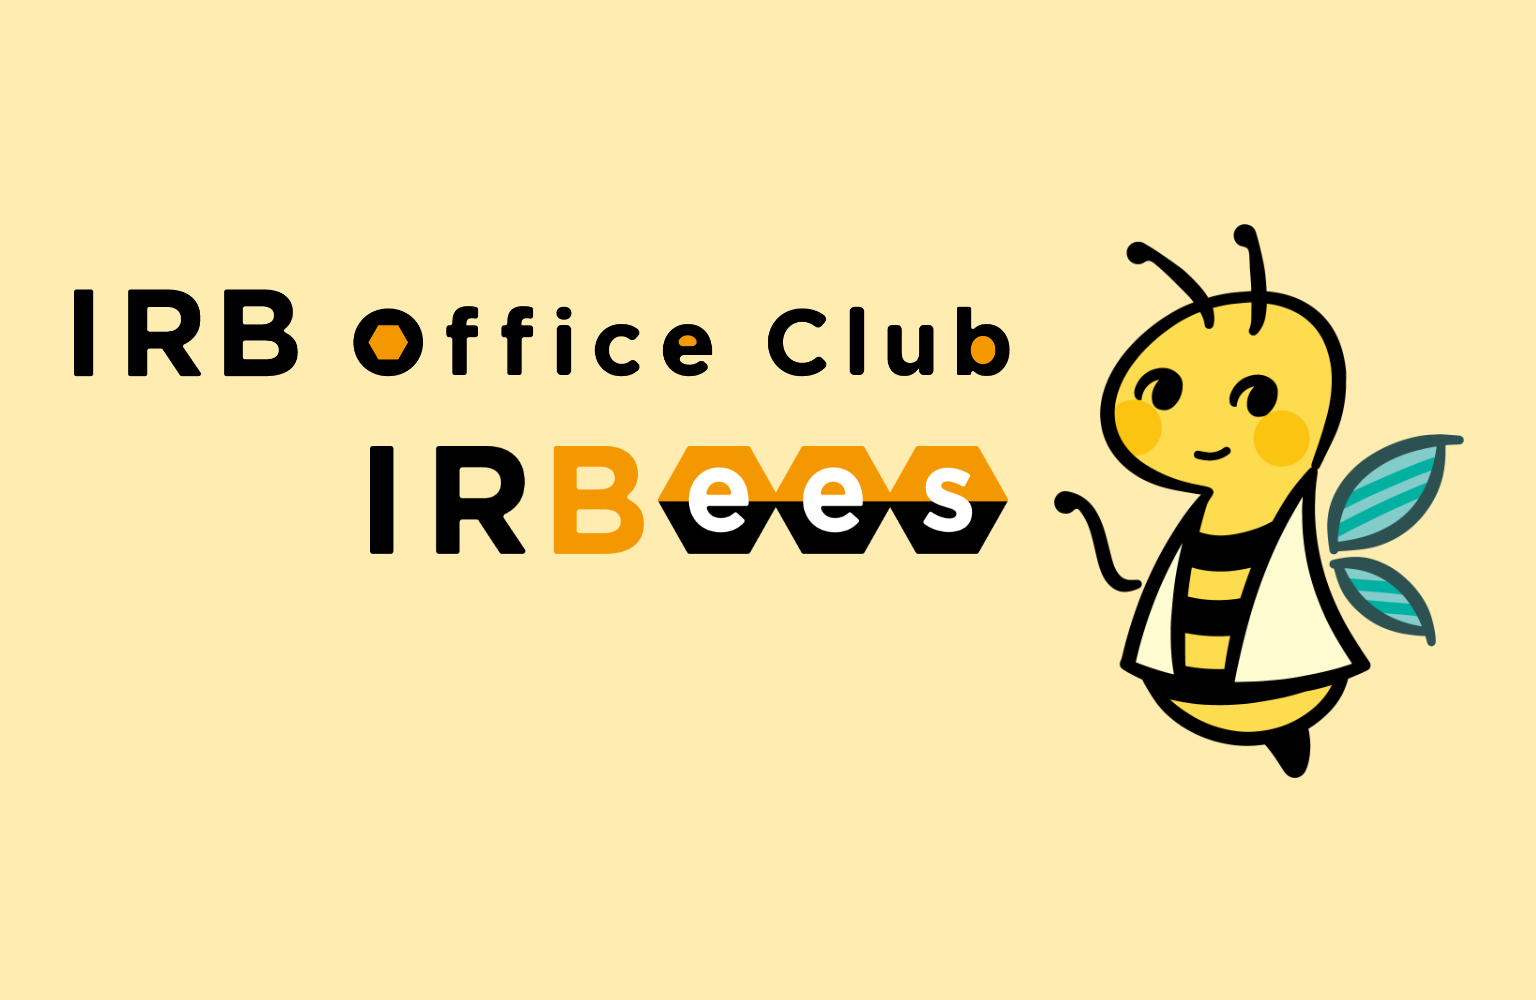 IRB Office Club